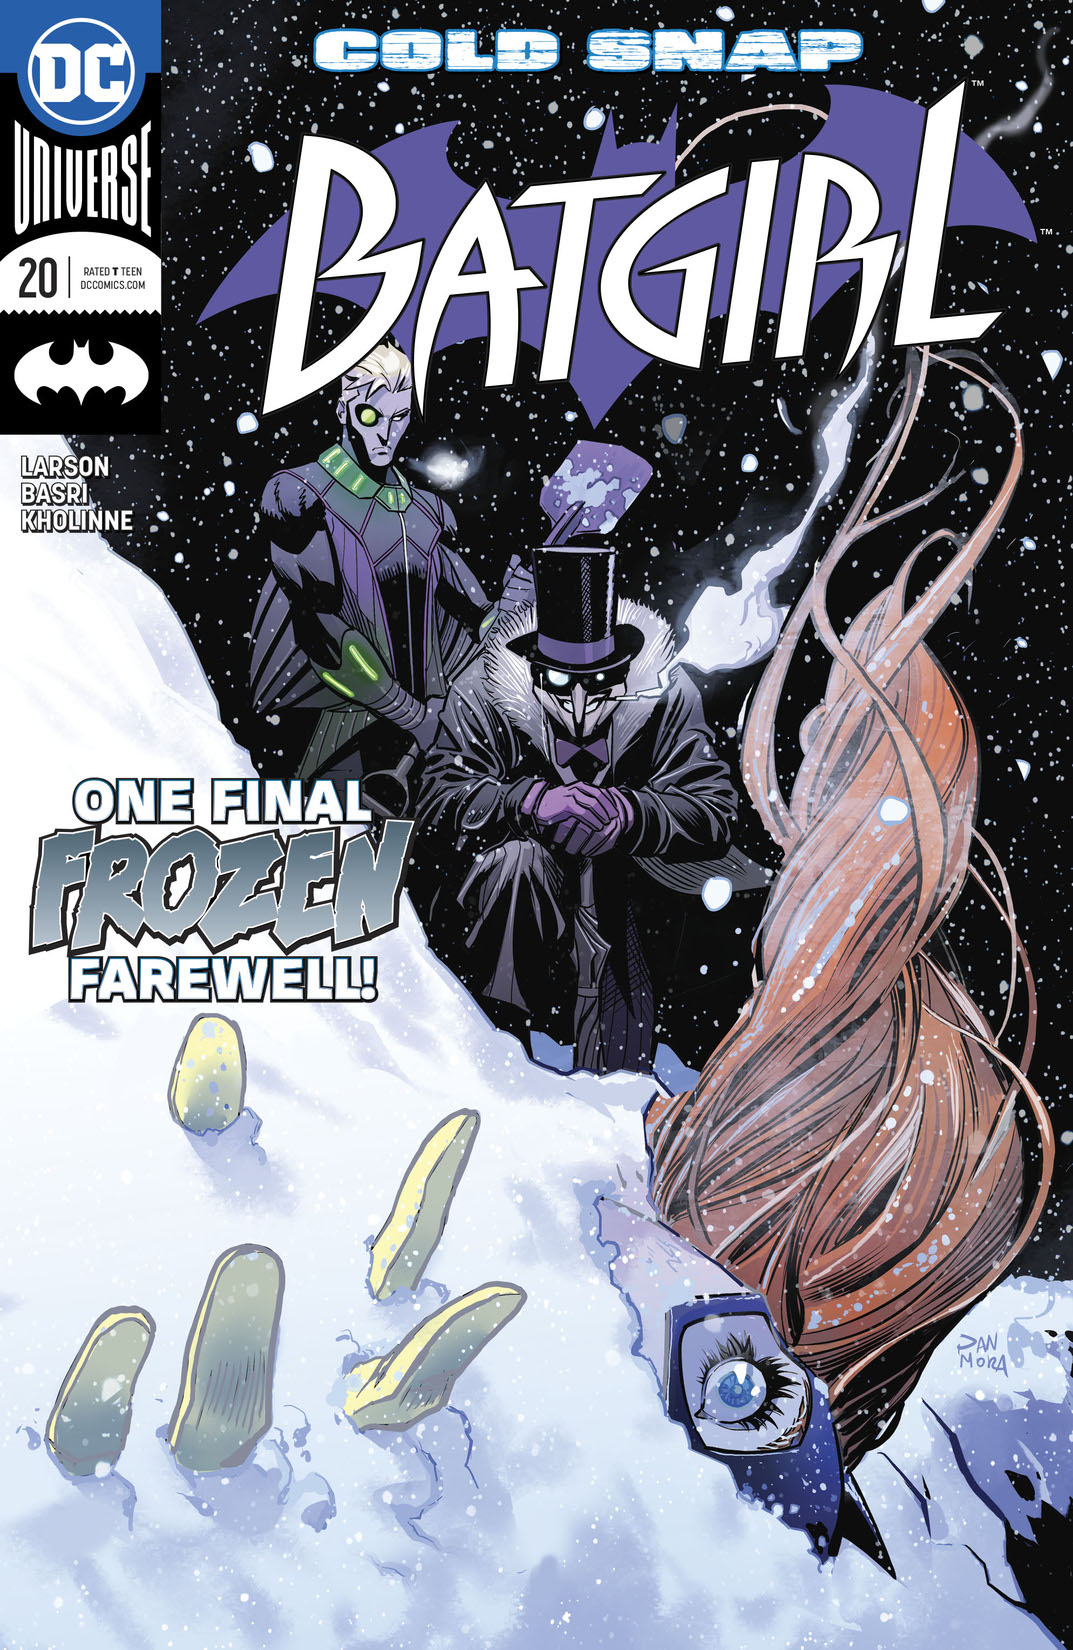 Batgirl (2016-) #20 preview images